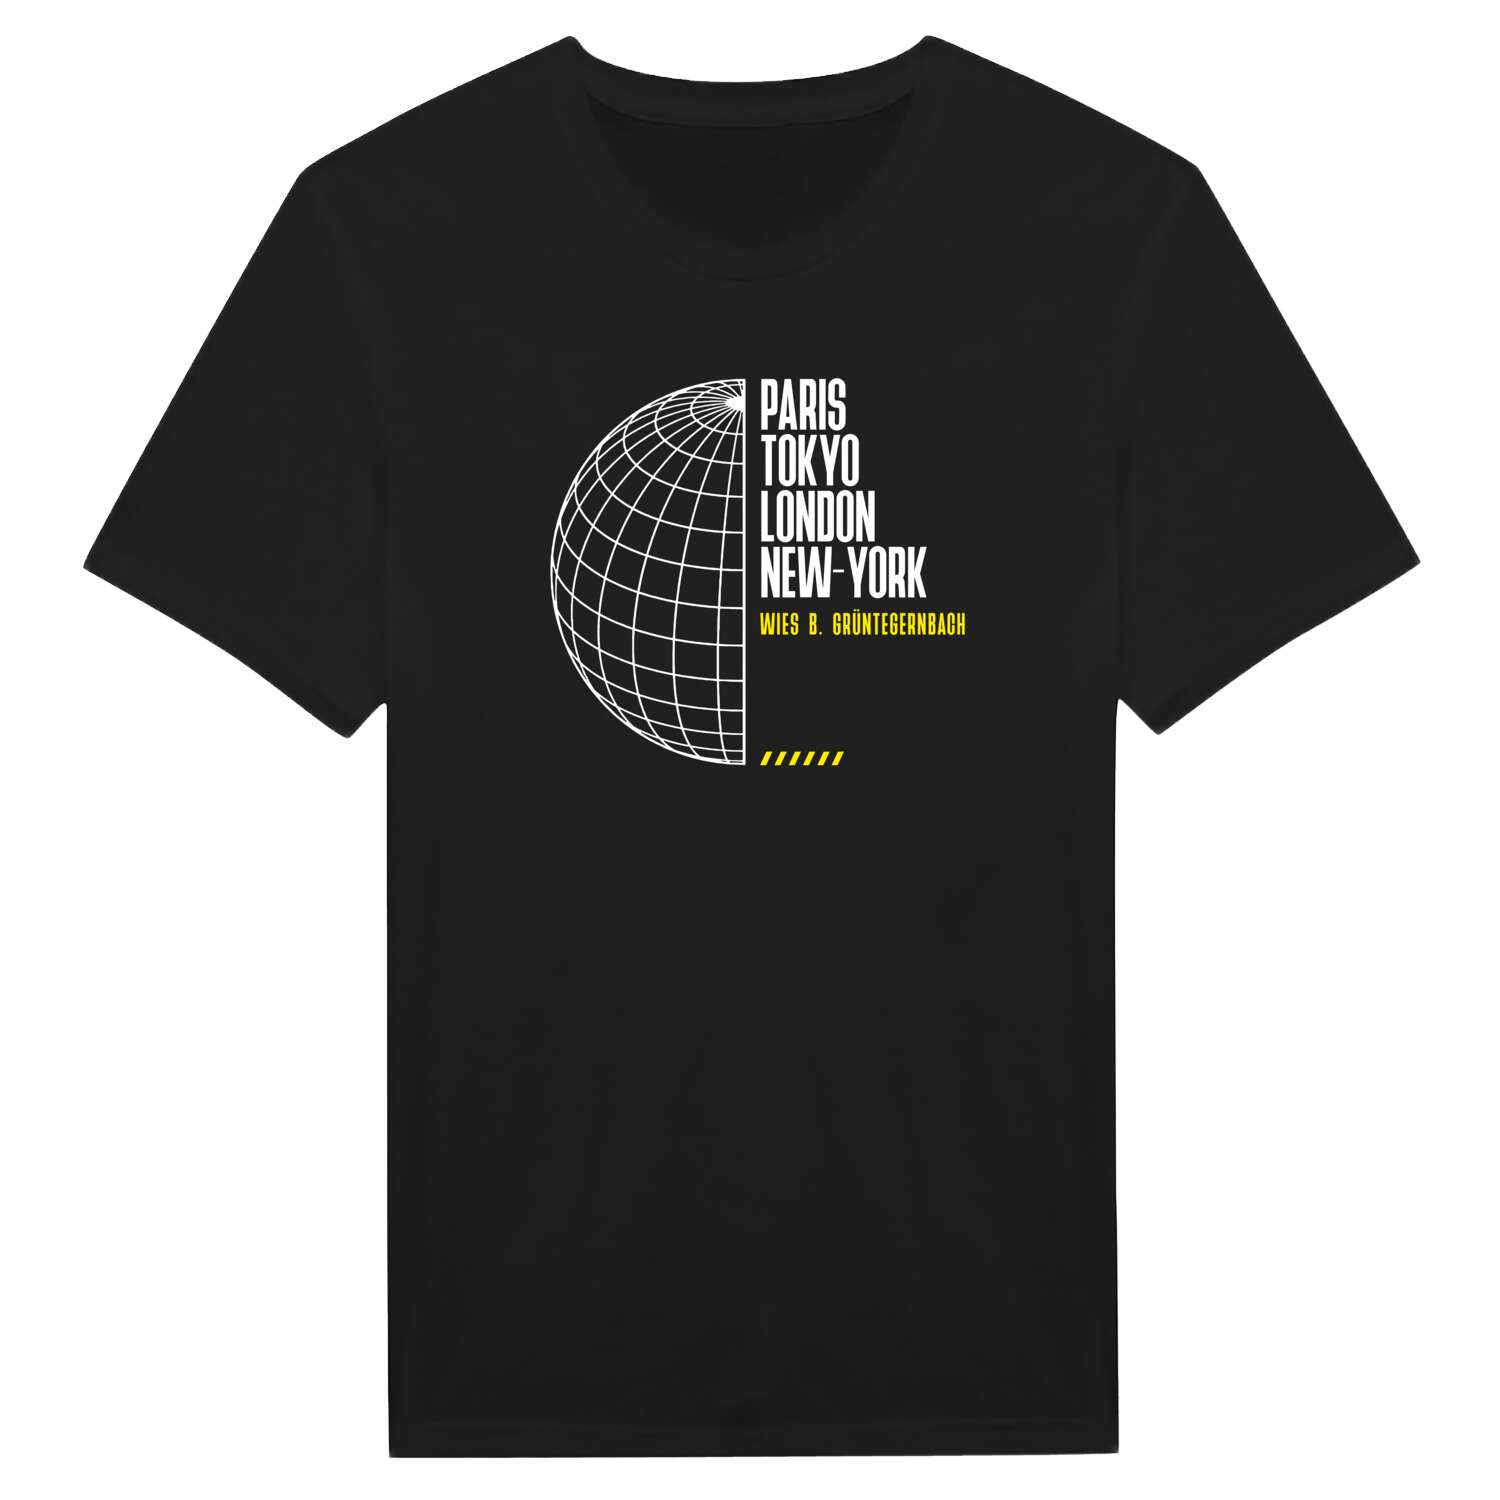 Wies b. Grüntegernbach T-Shirt »Paris Tokyo London«